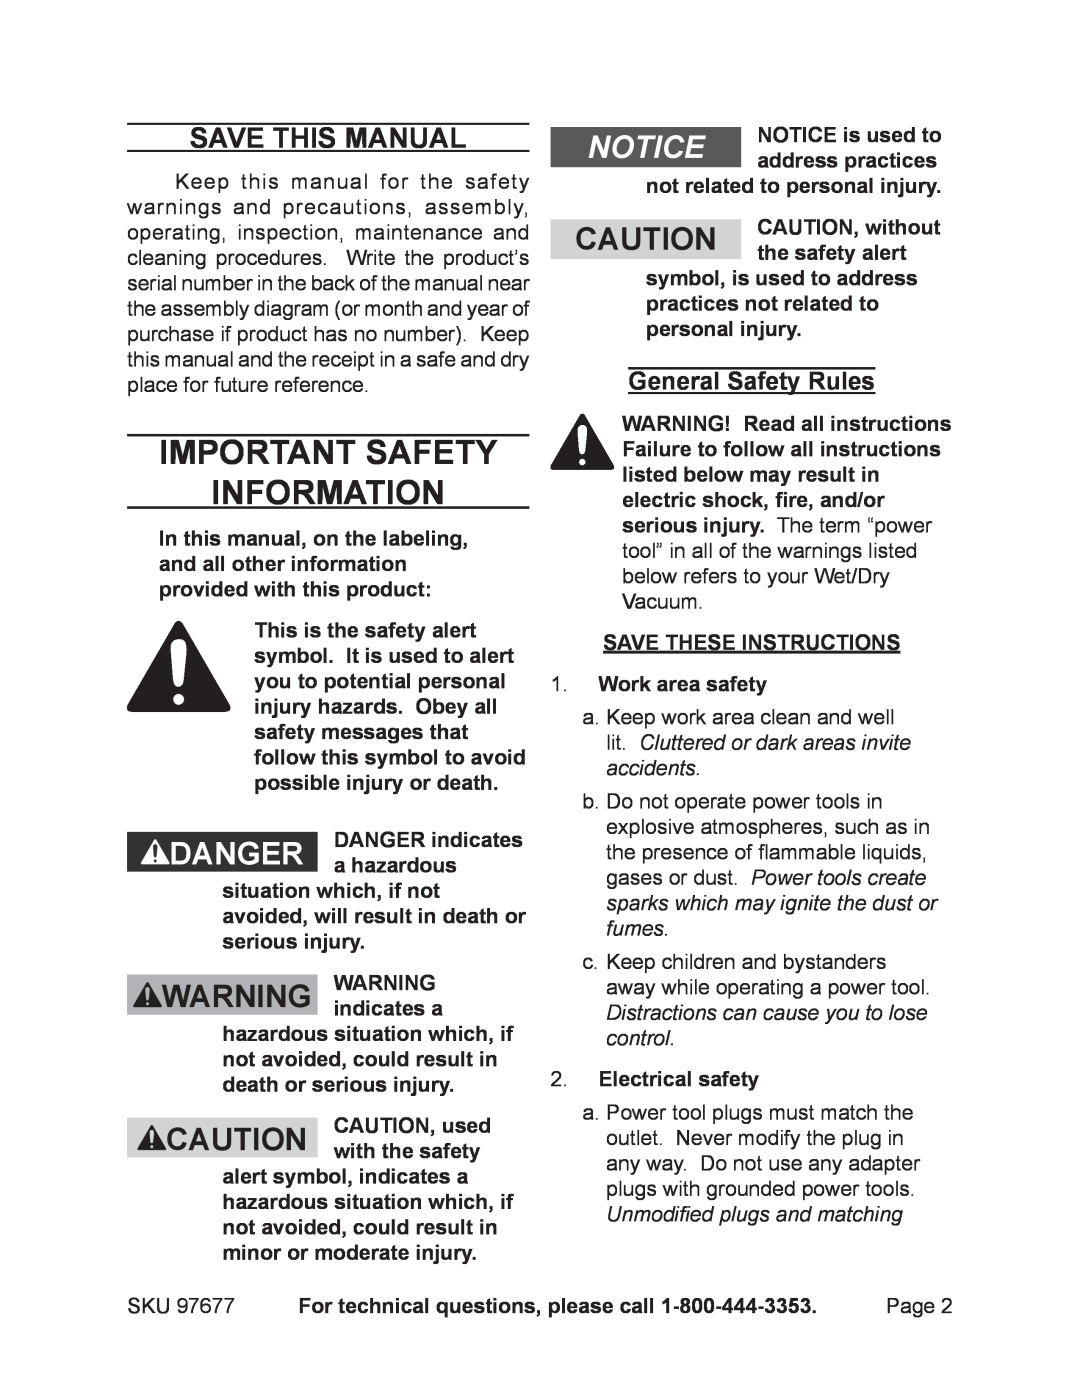 Chicago Electric 97677 manual Important SAFETY Information, Save This Manual, Danger, Warning Warning 